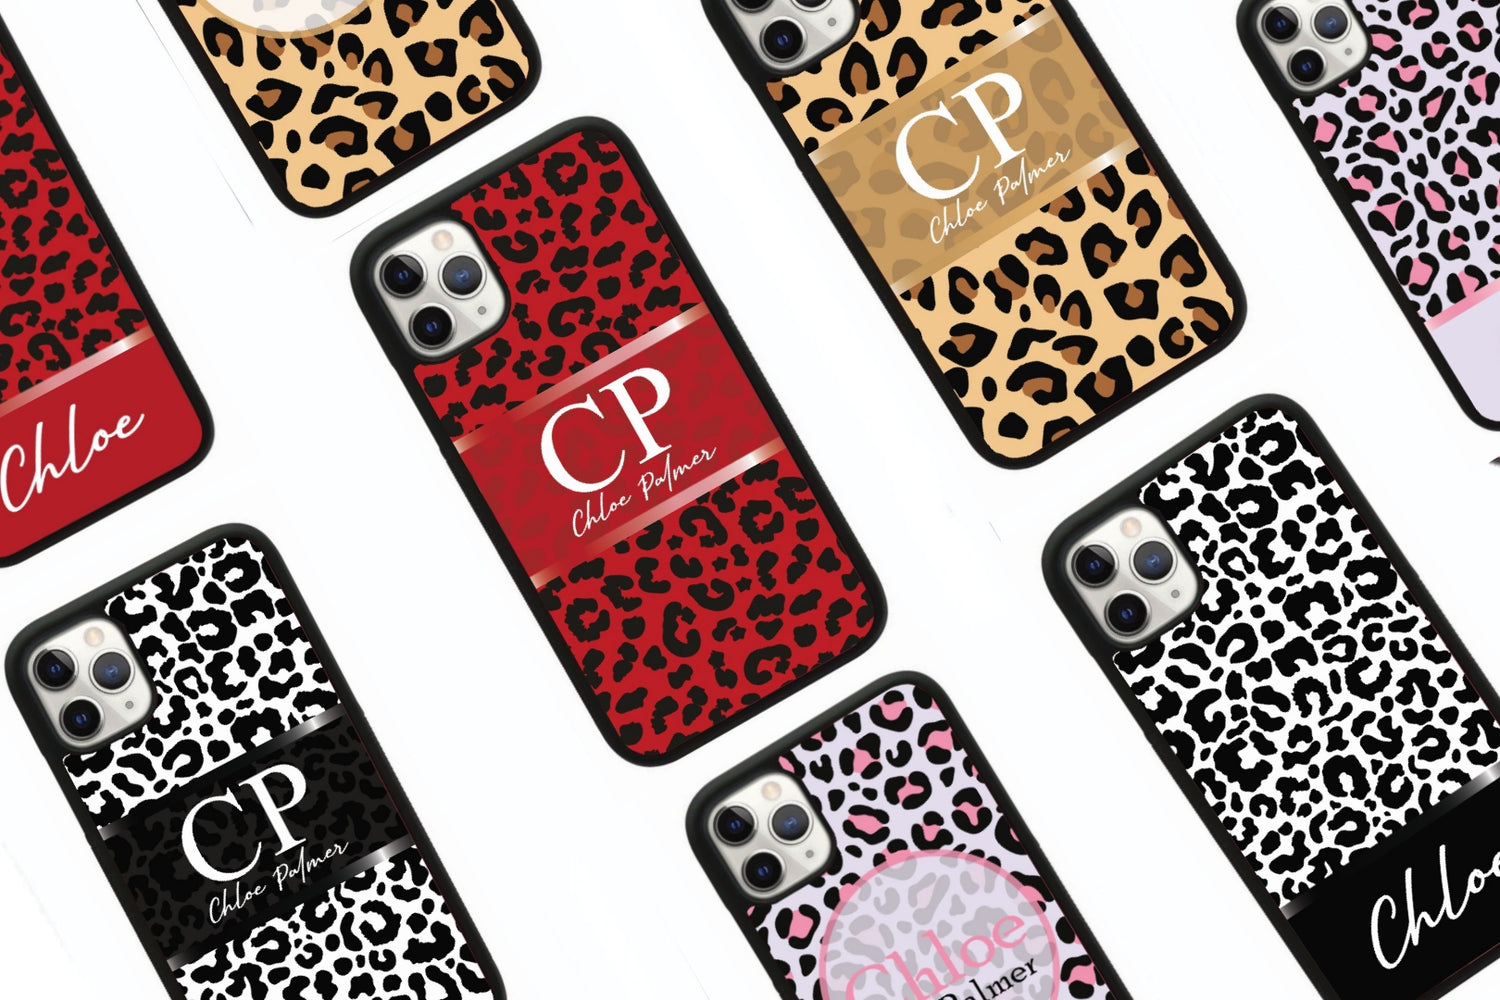 Leopard Print Cases